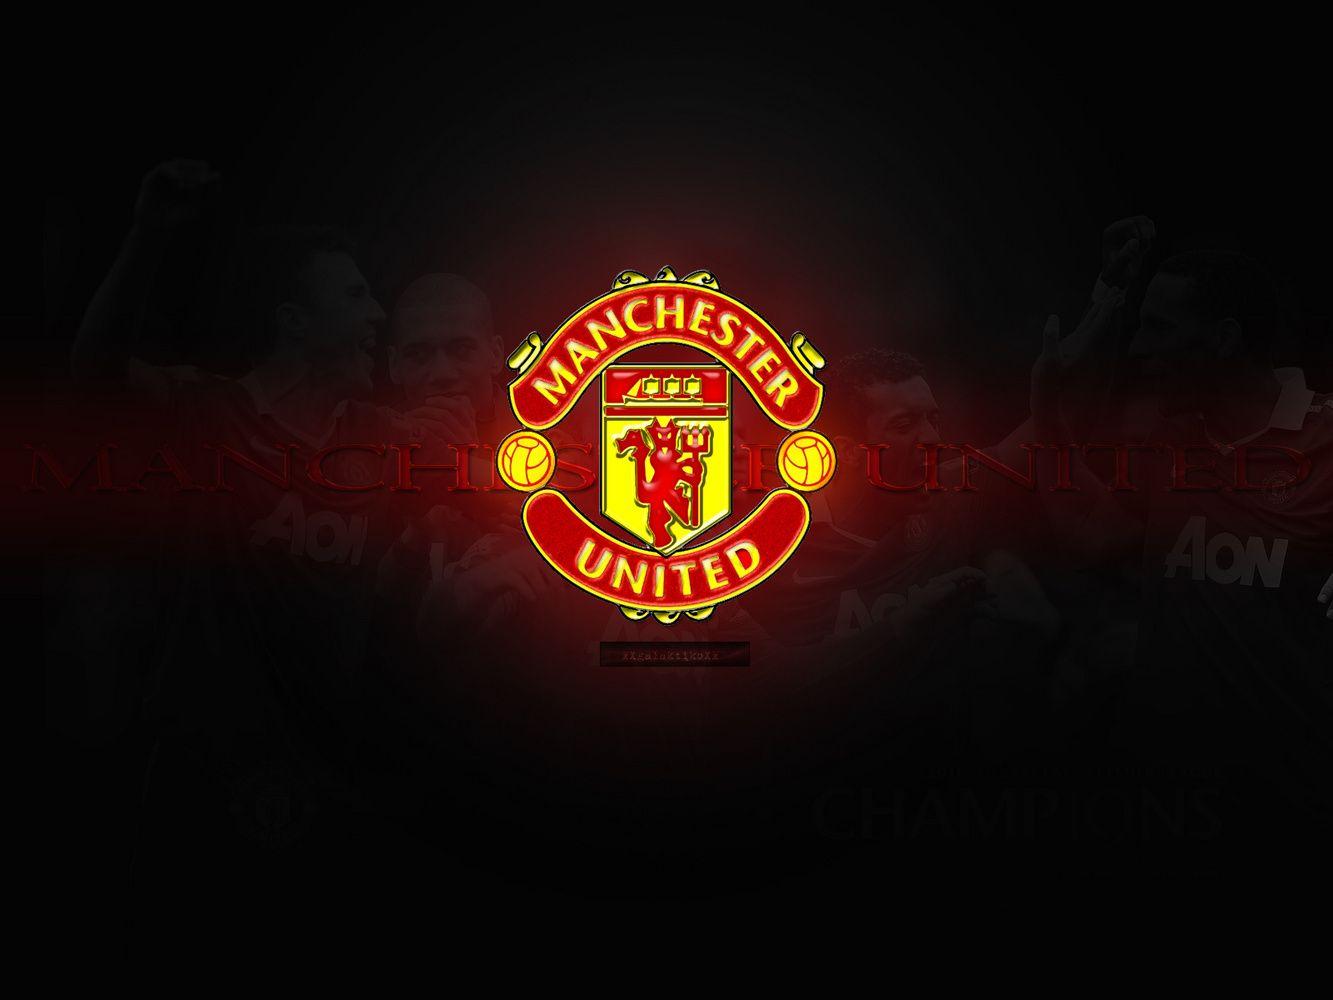 Manchester United Logo Wallpaper Free Download. (52++ Wallpaper)